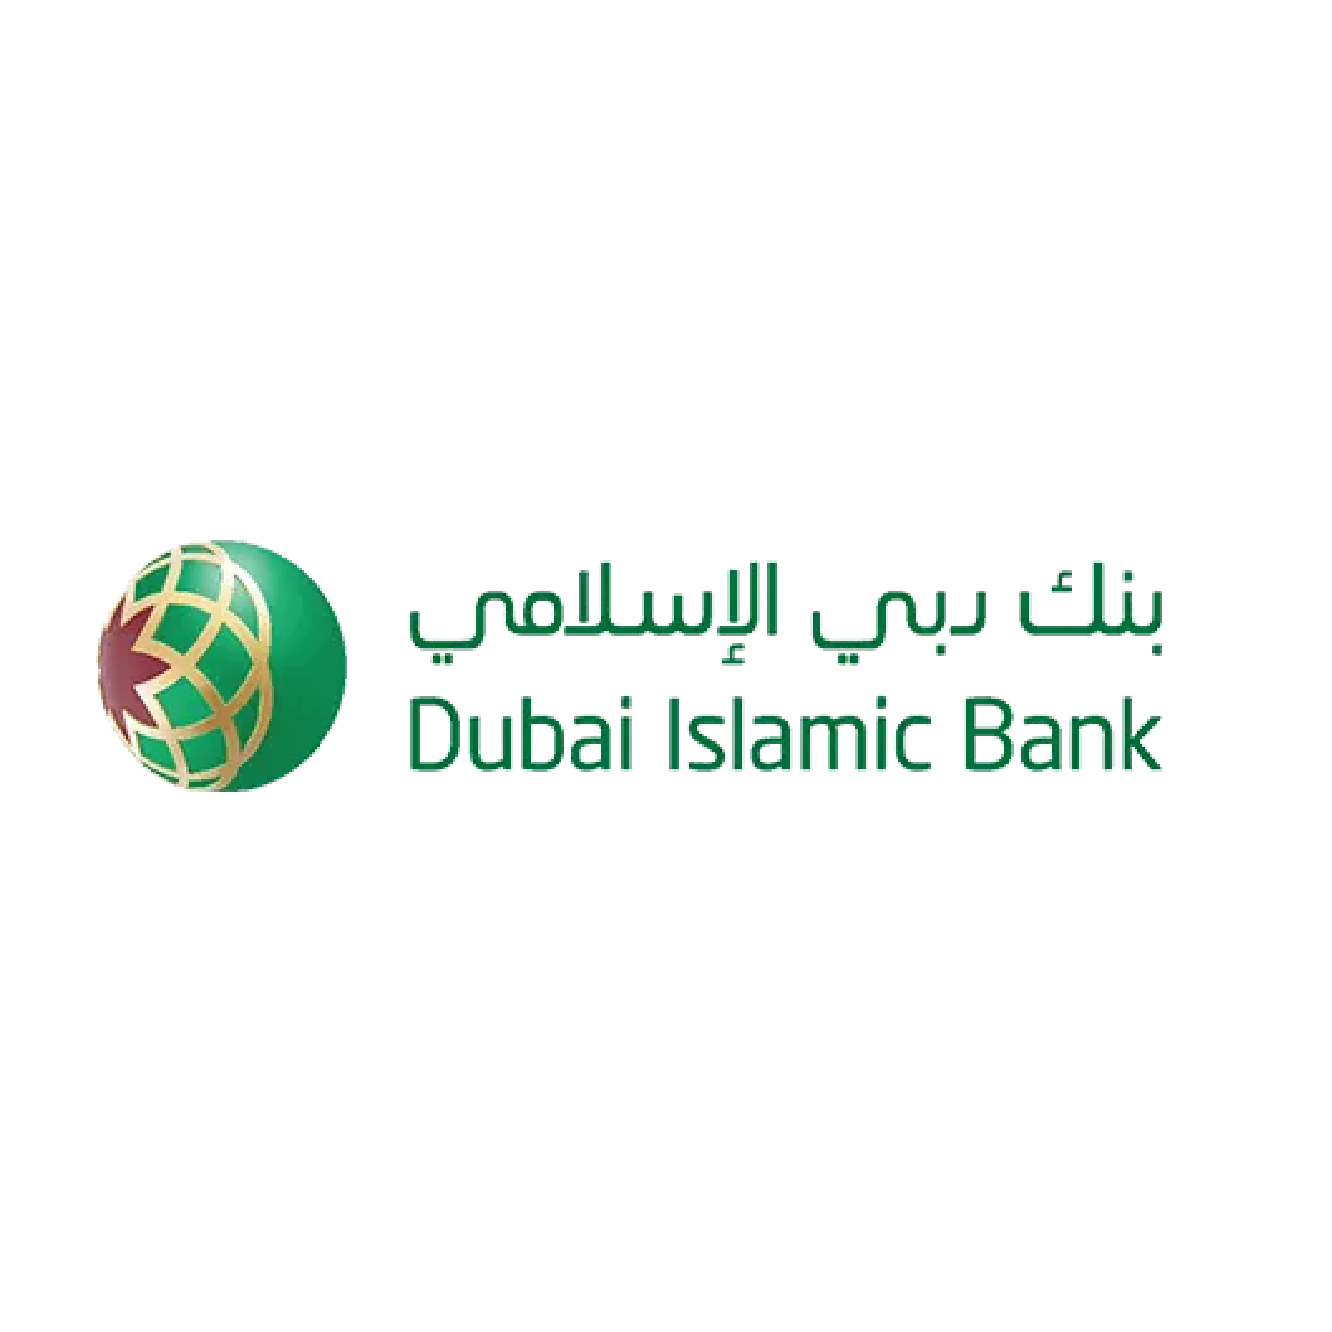 Head of Performance and Rewards, Dubai Islamic Bank